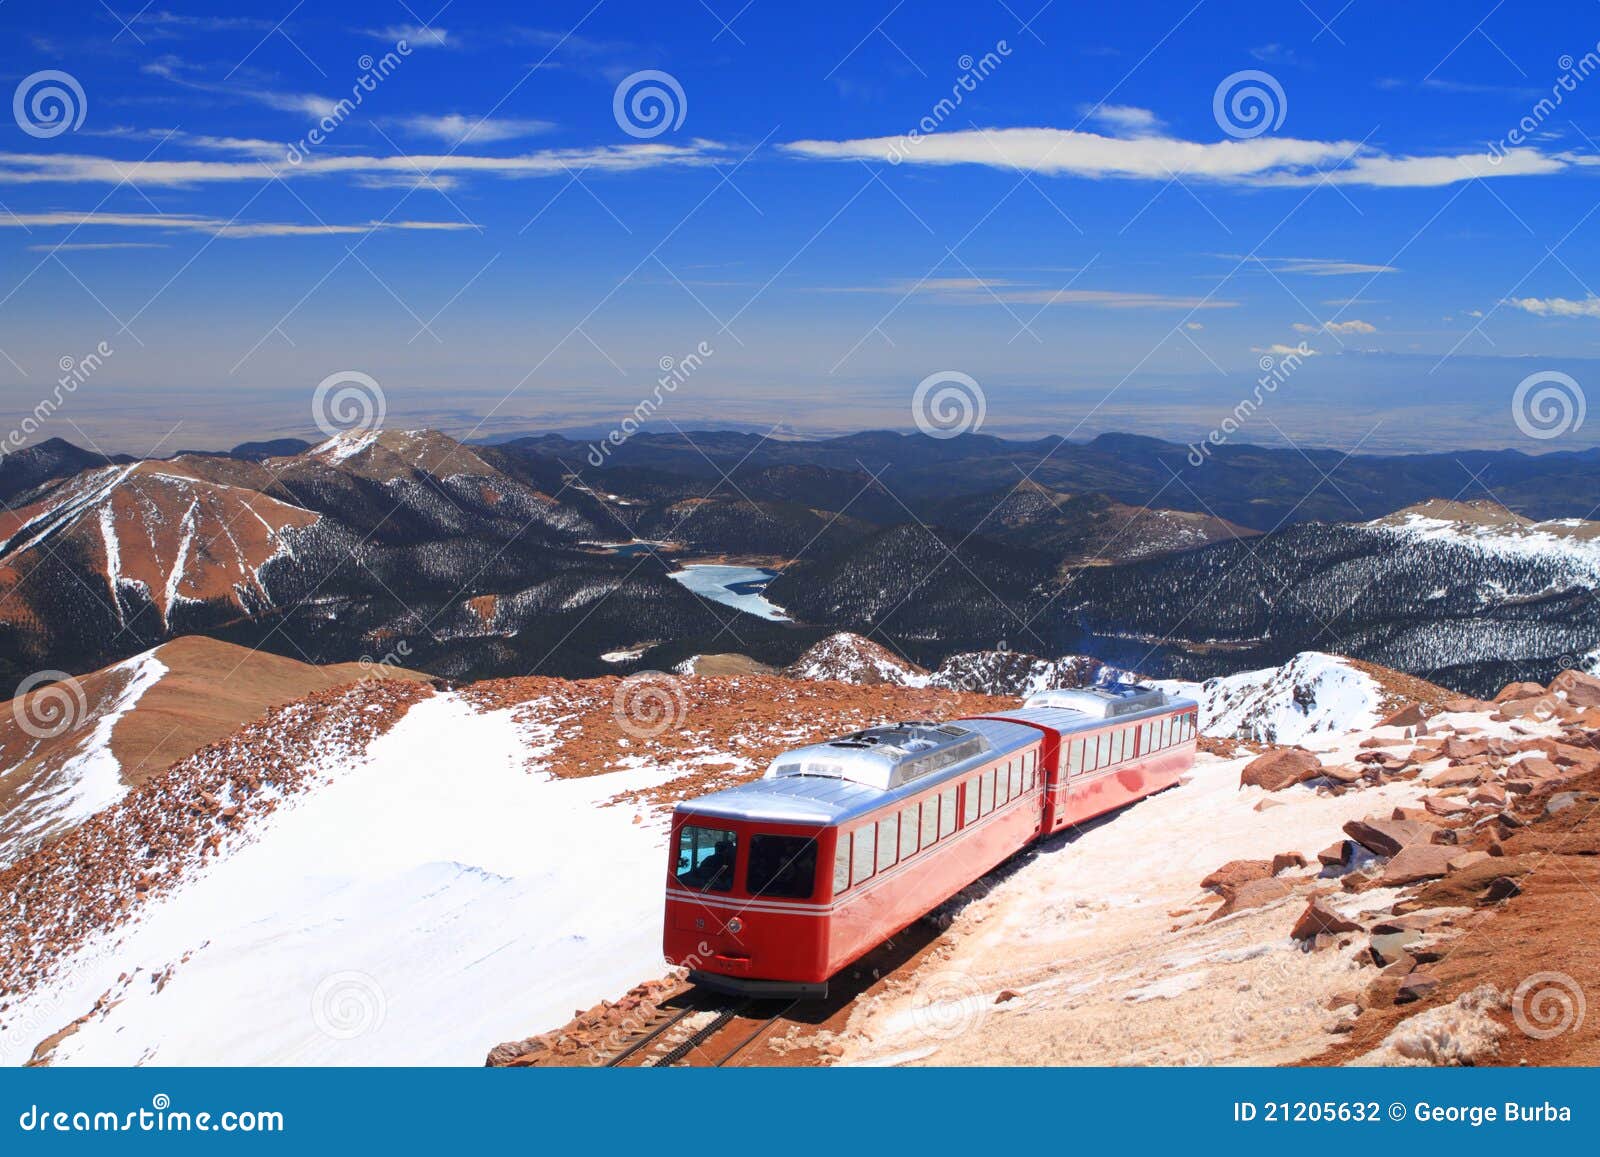 pikes peak train